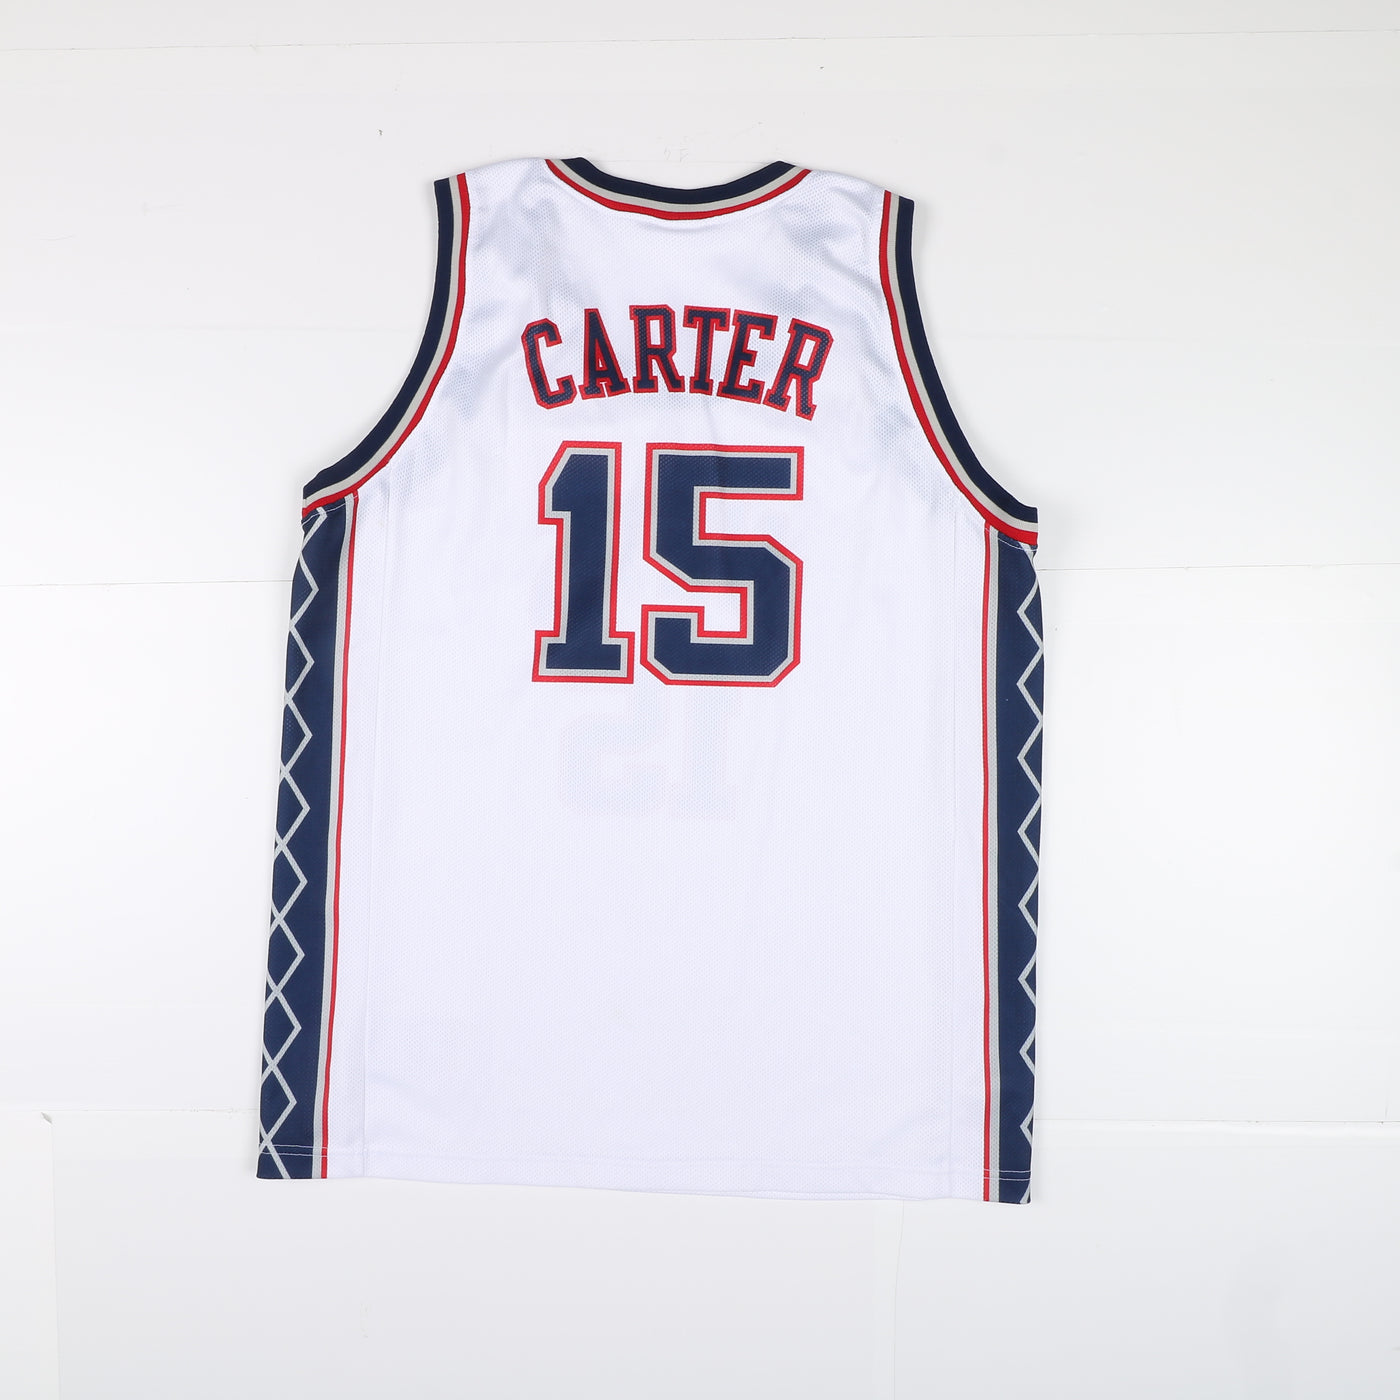 Maglia da Basket NBA Champion New Jersey Nets Carter 15 Taglia XL Bianca